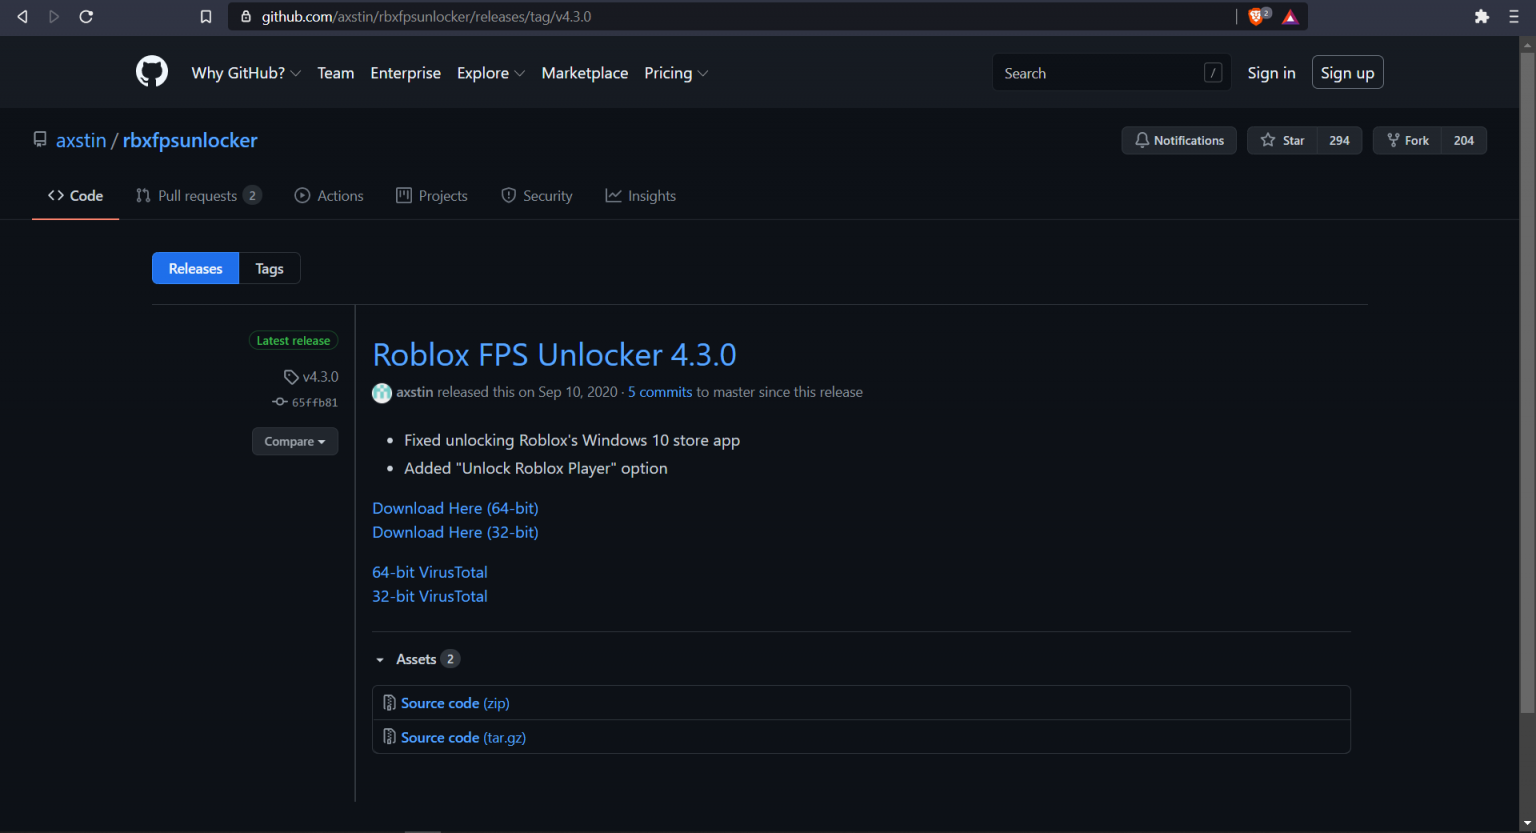 Roblox fps unlocker 4.1.1 video